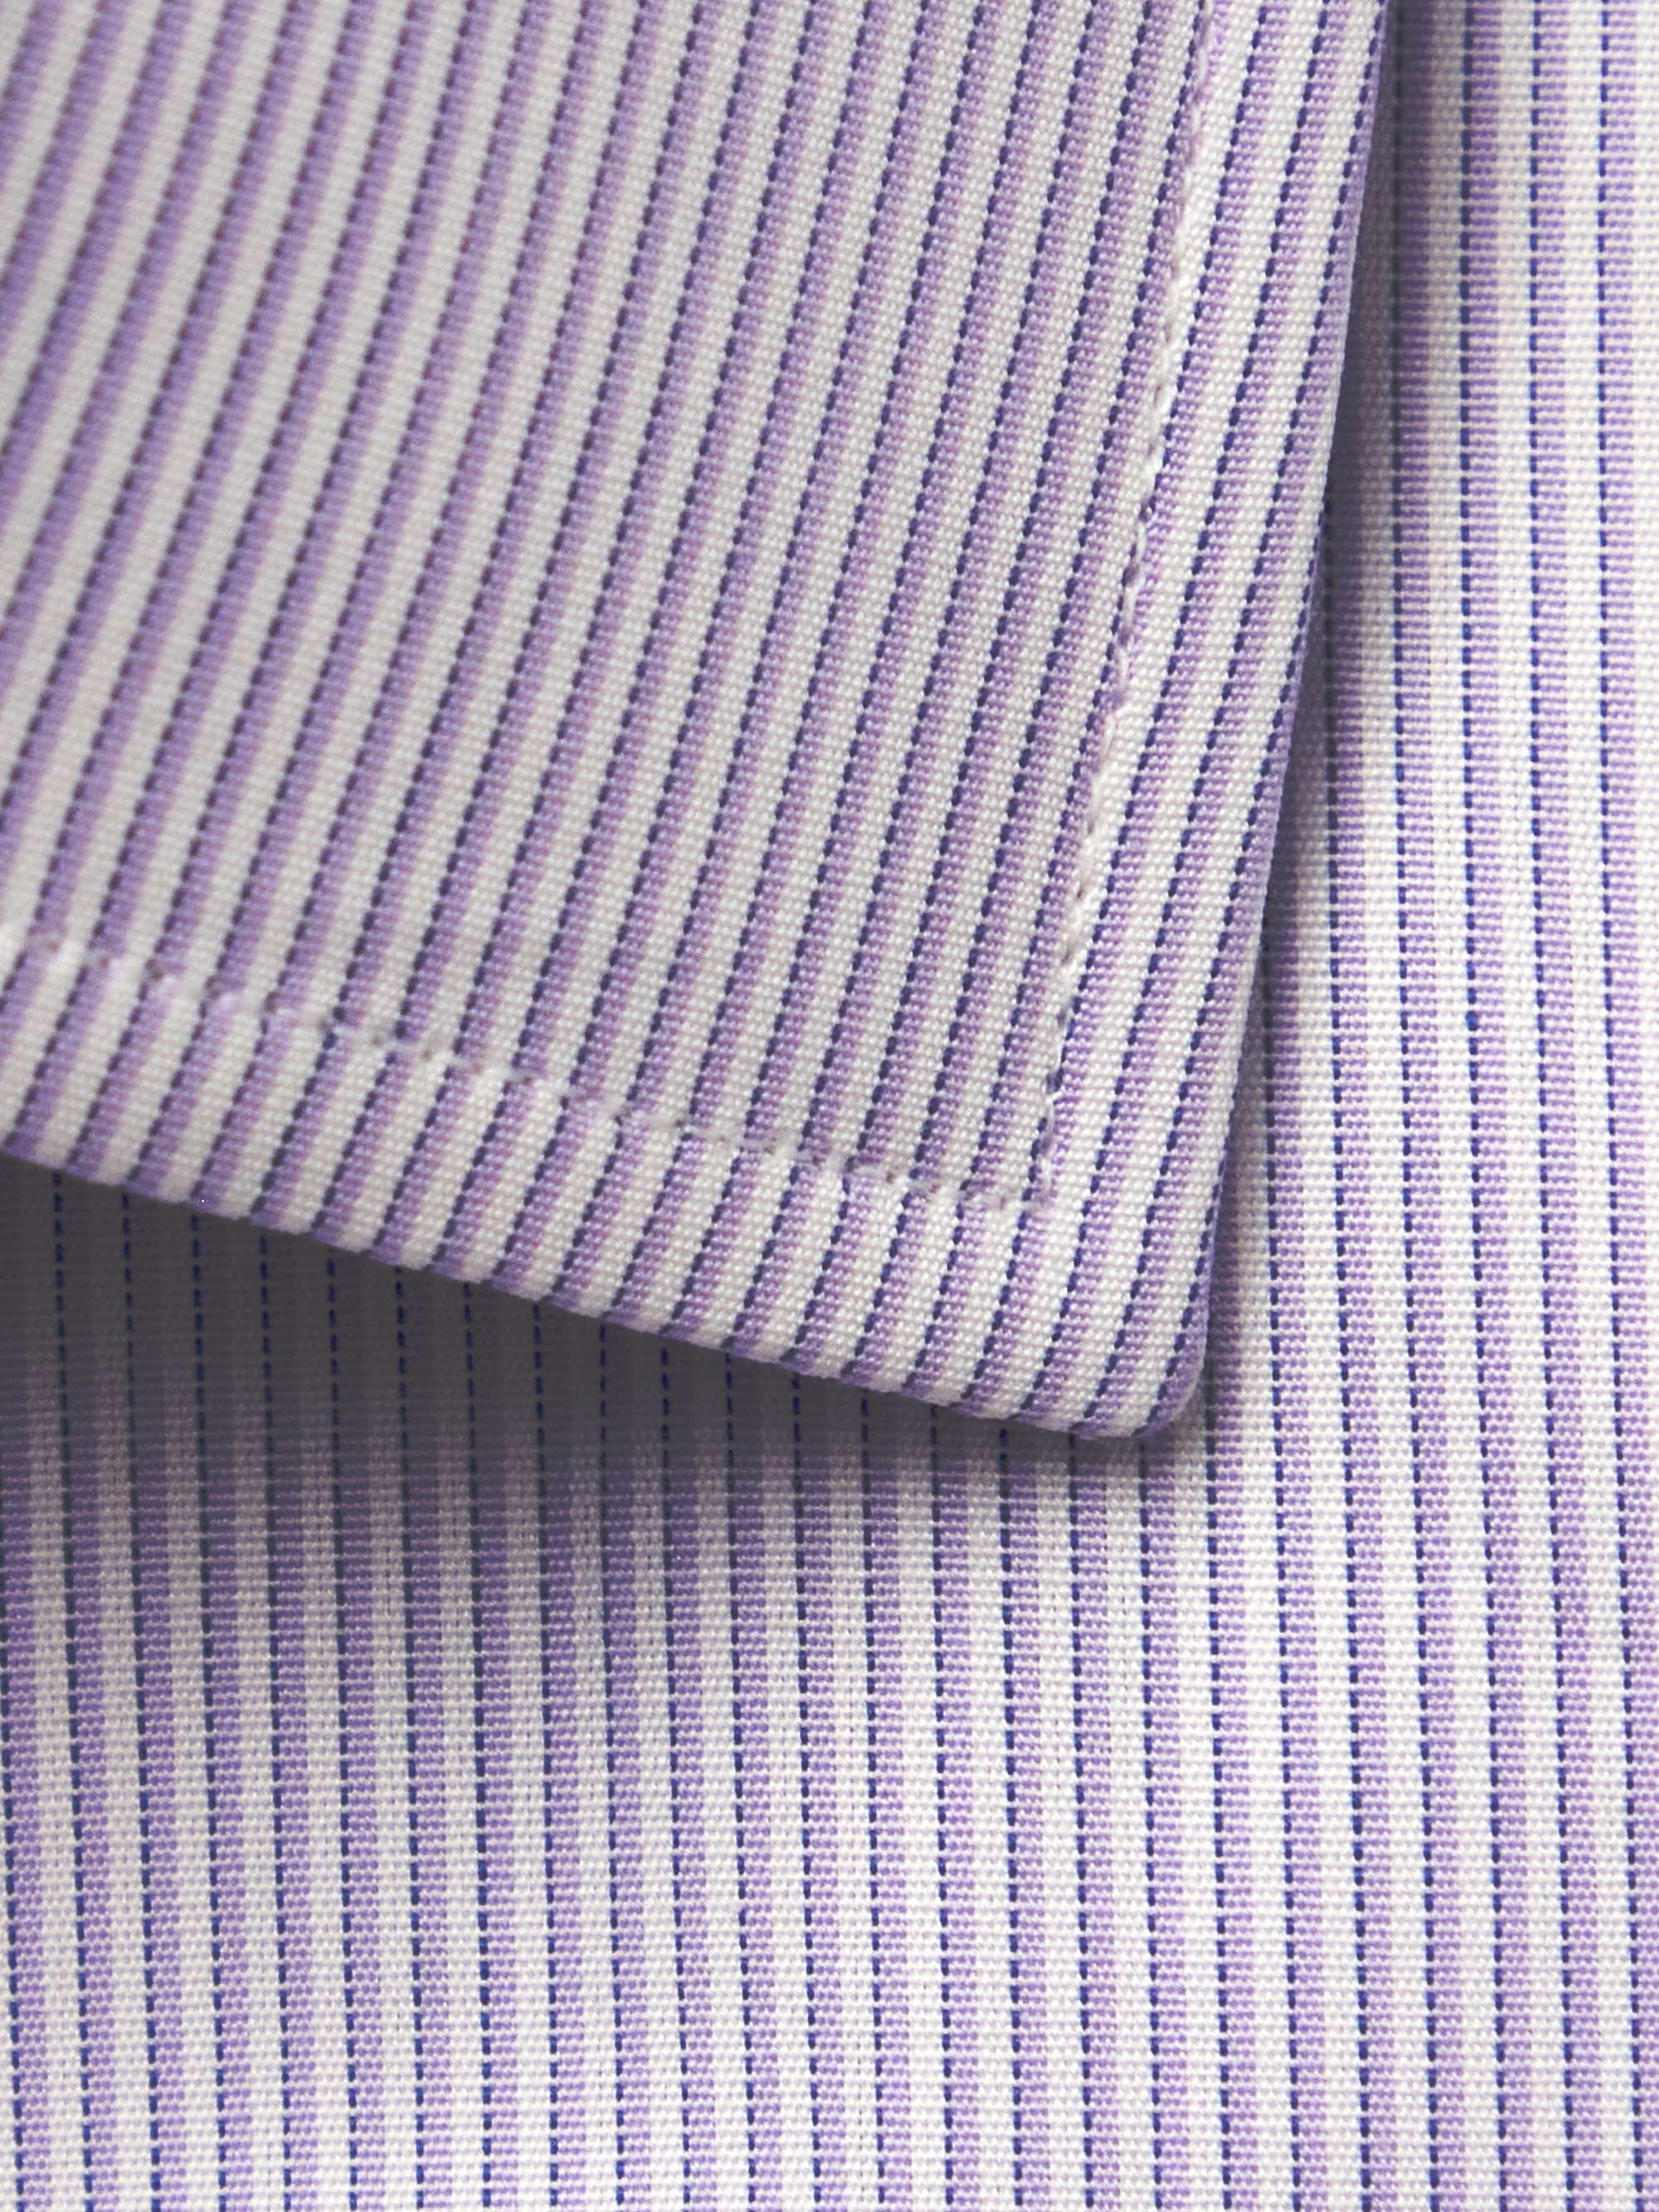 CHARVET Double Striped Cotton-Poplin Shirt